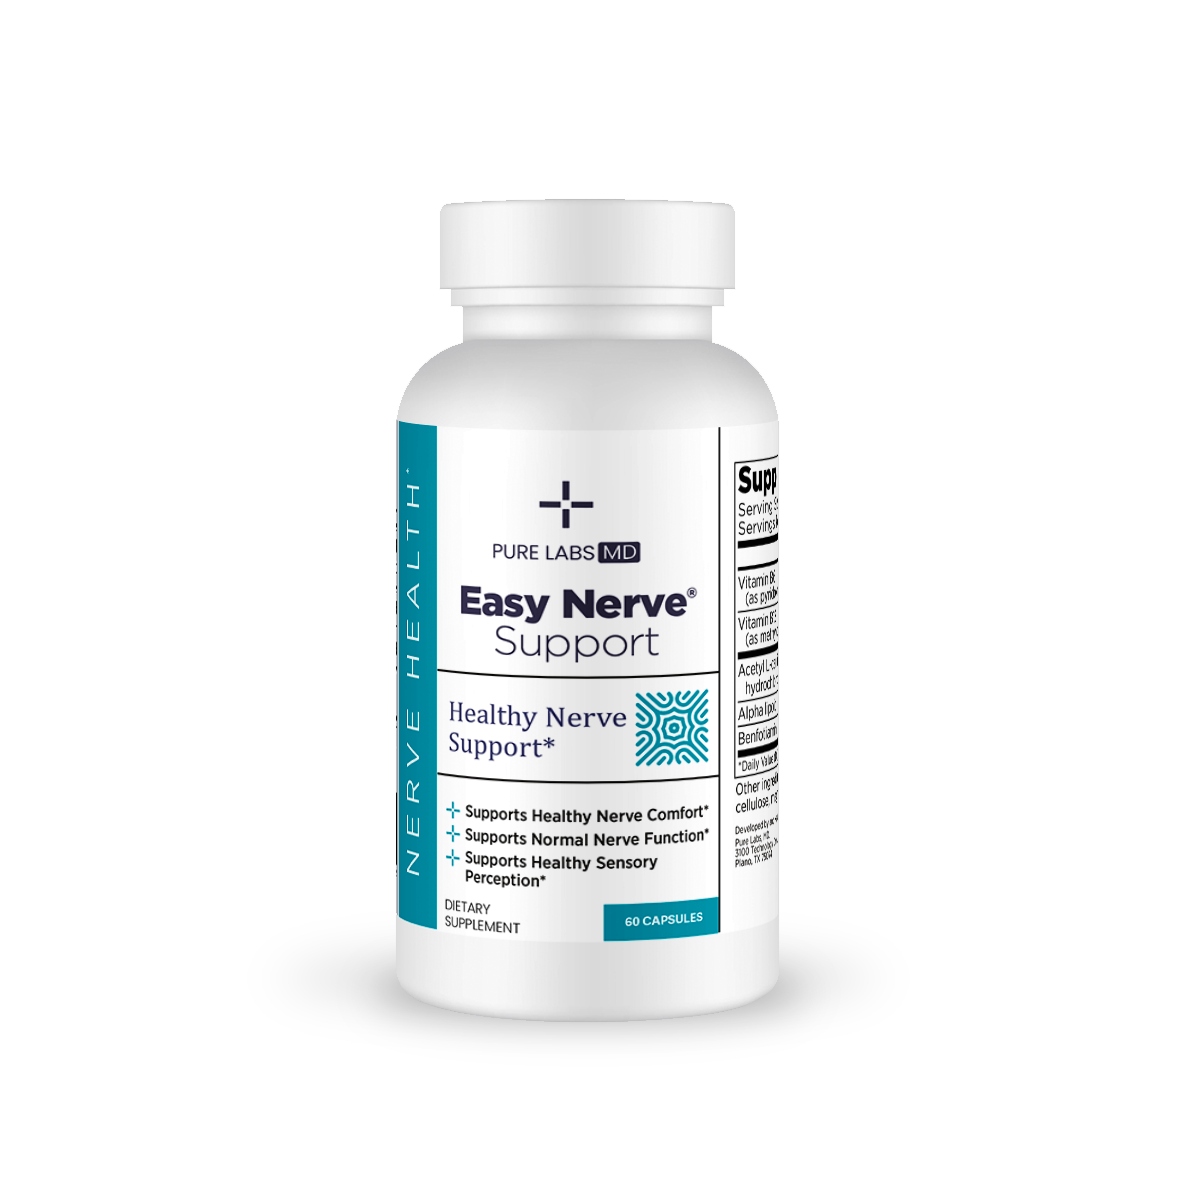 1 Bottle of Easy Nerve Support